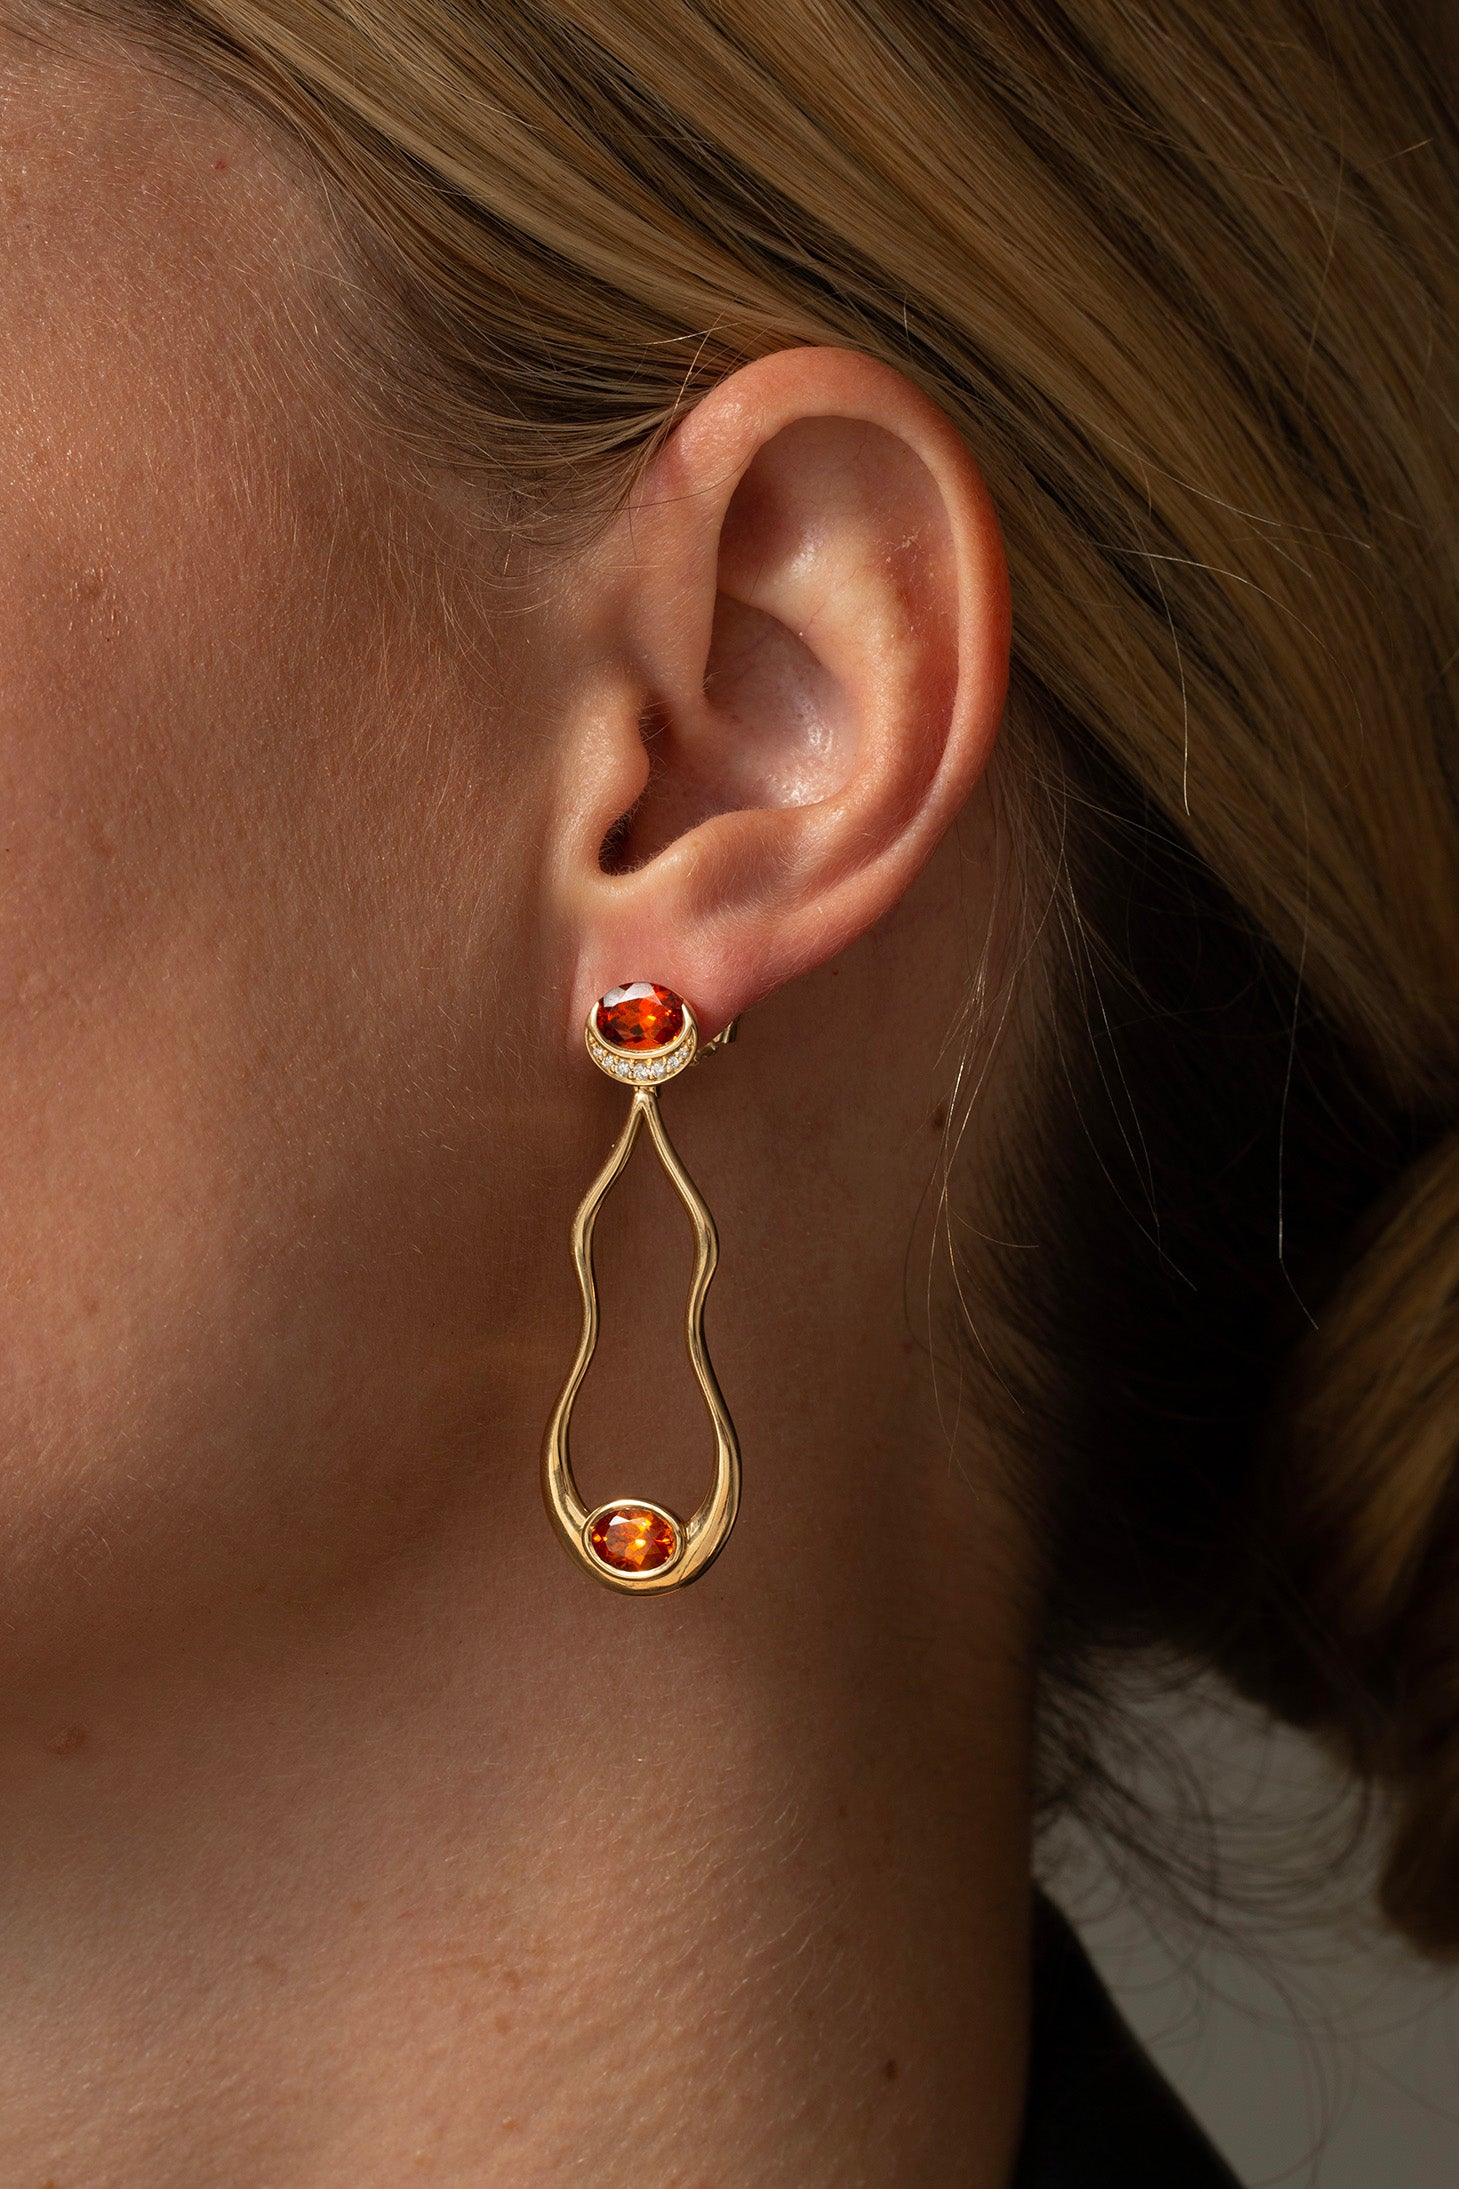 Hourglass Earrings with Orange Garnet